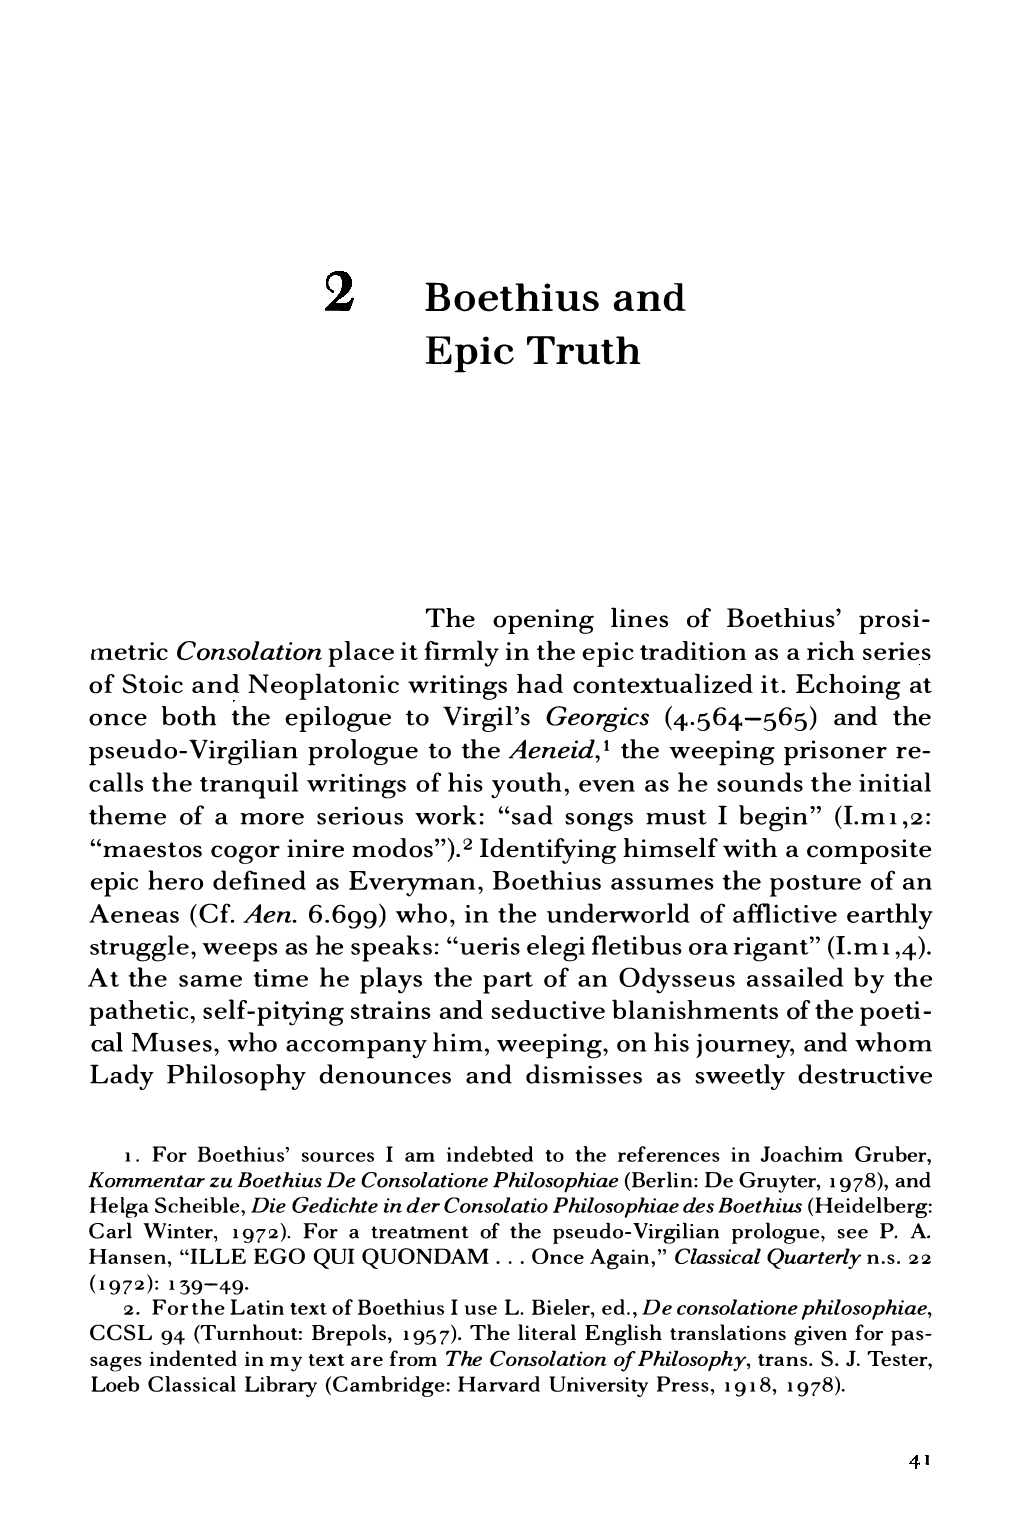 Boethius and Epic Truth